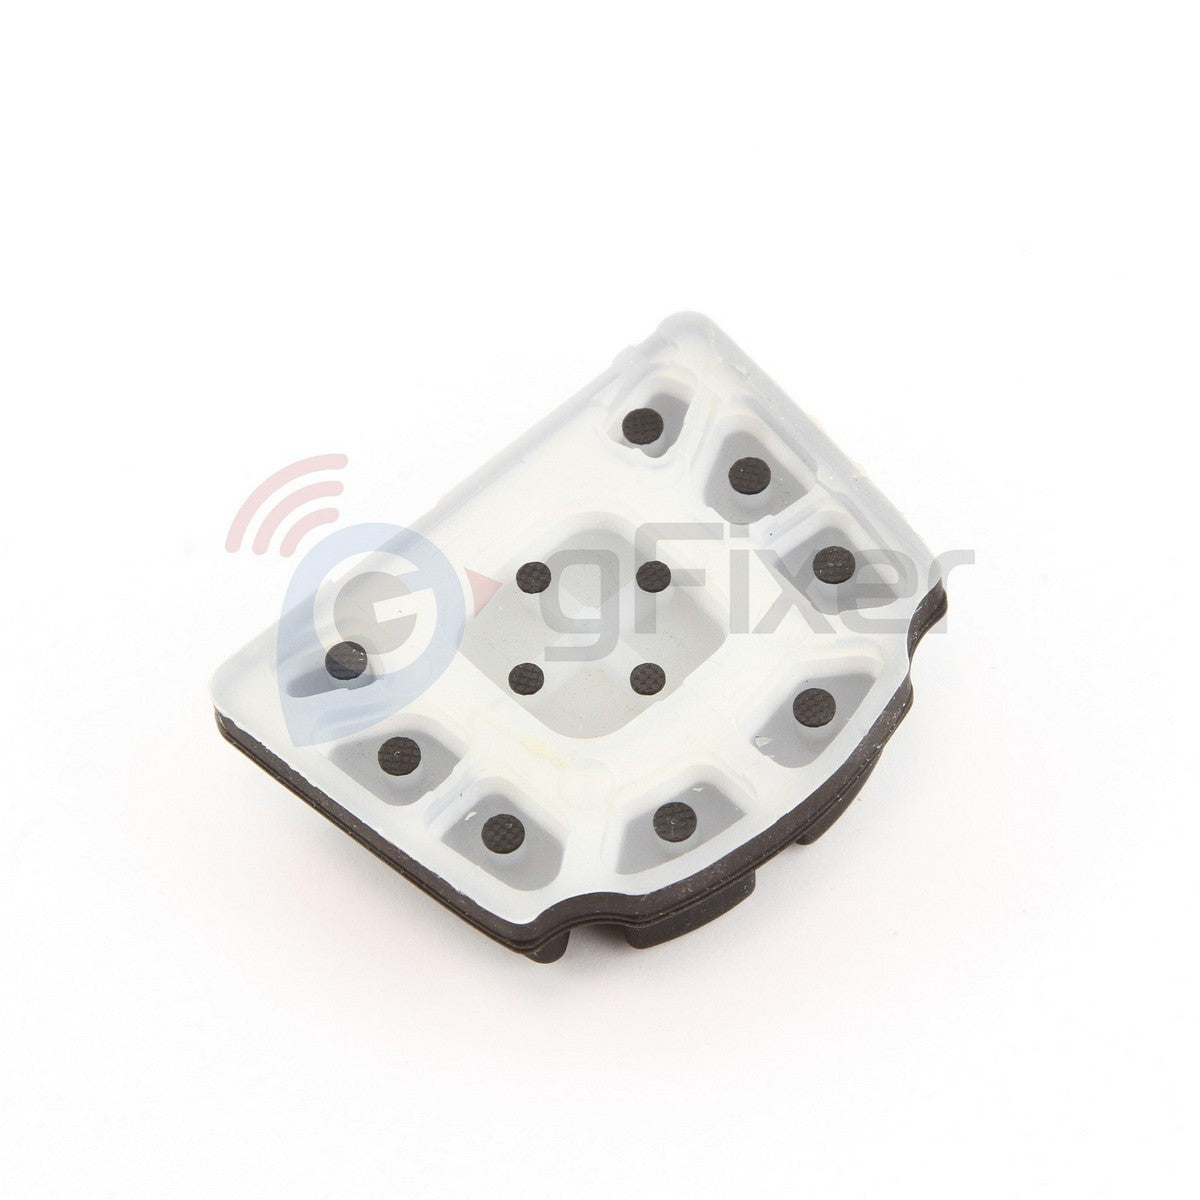 Used Rubber button Garmin GPSMAP 64 64s 64st part repair rubber